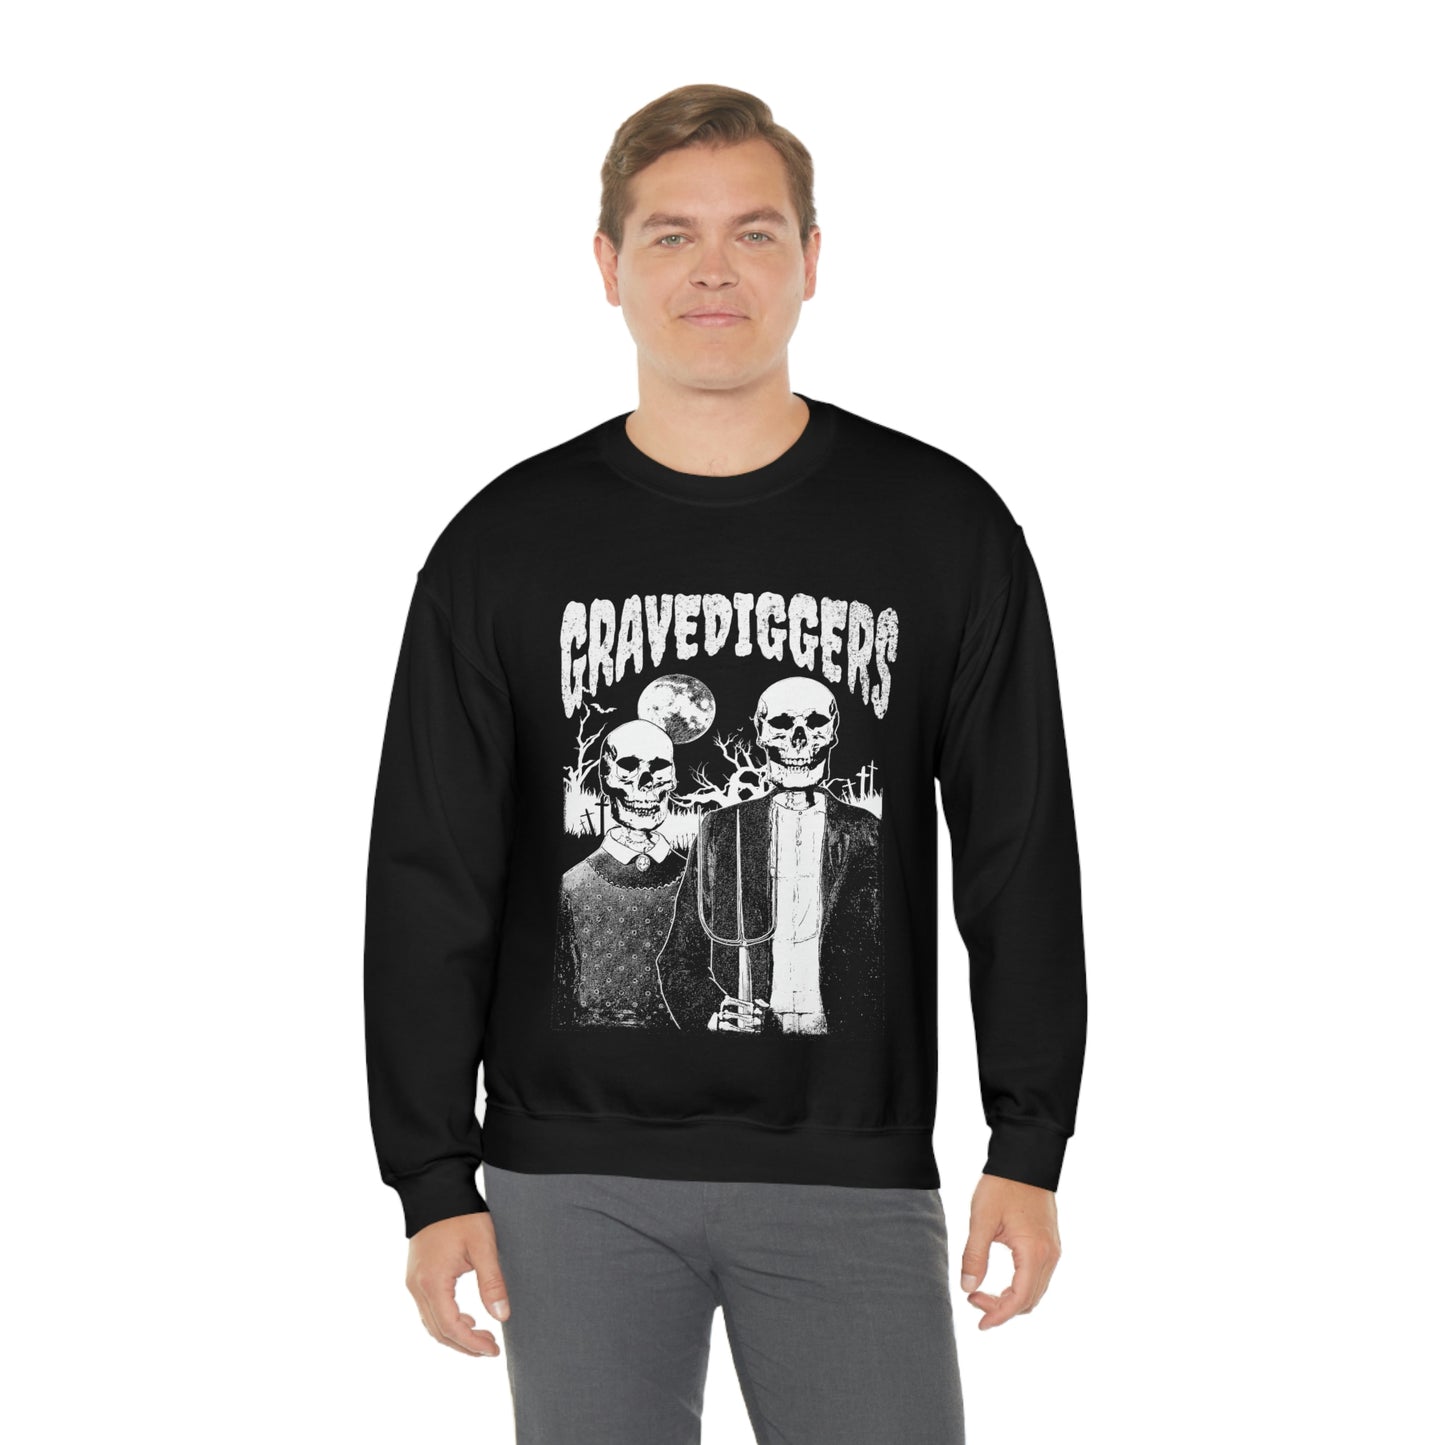 Gravediggers Goth Aesthetic Sweatshirt